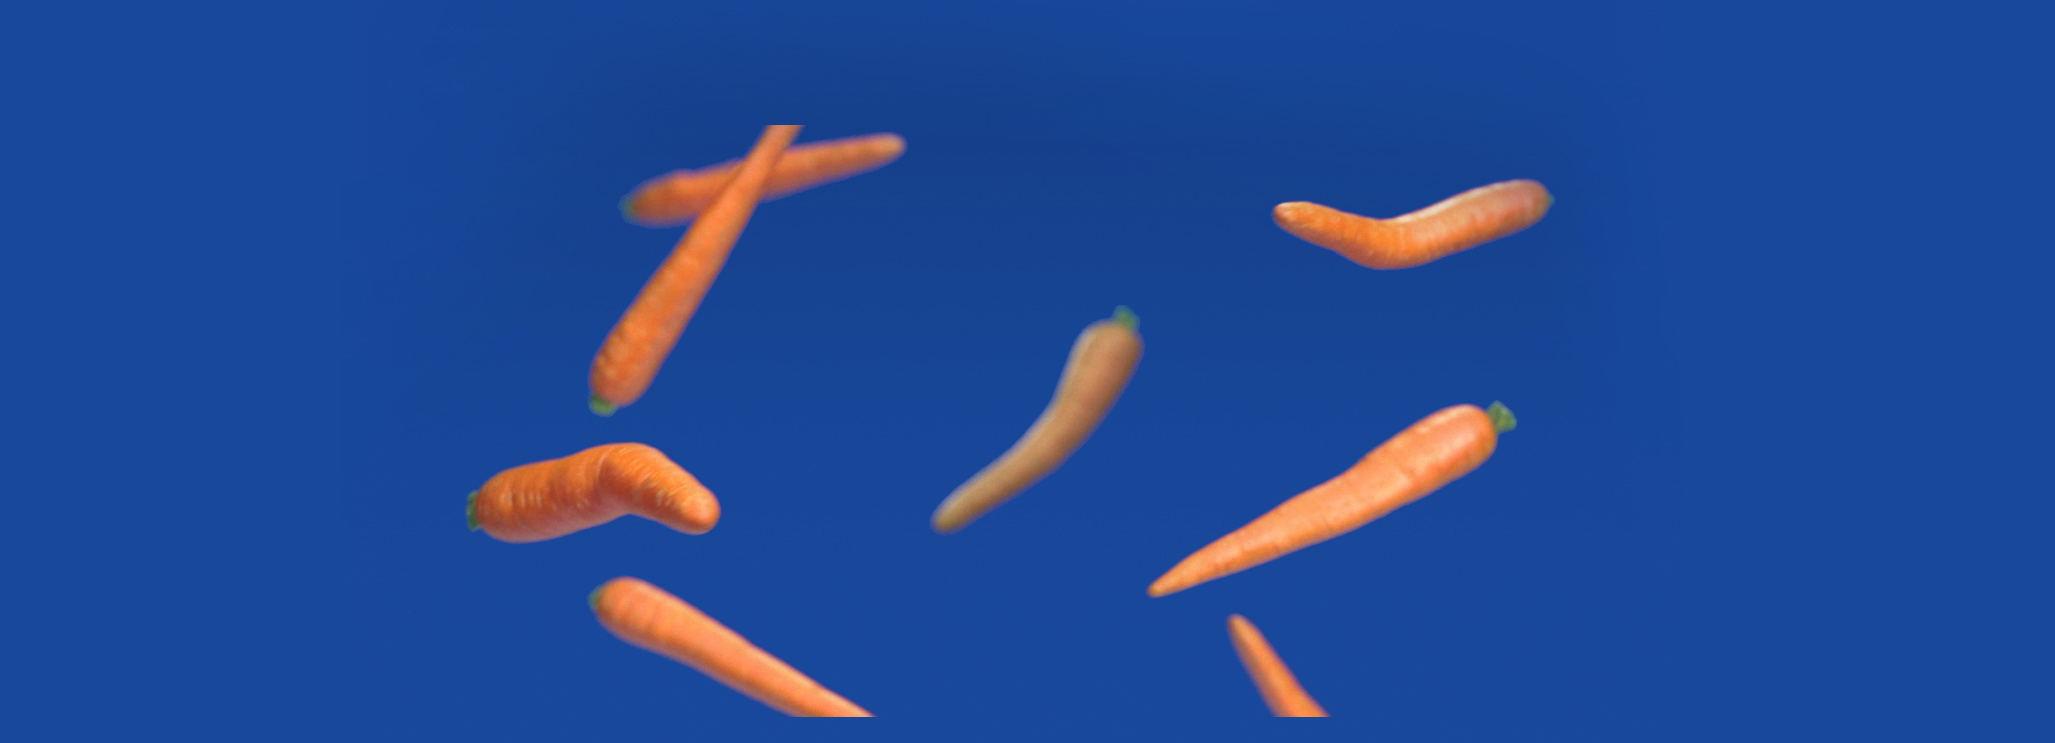 bent carrots floating on blue background